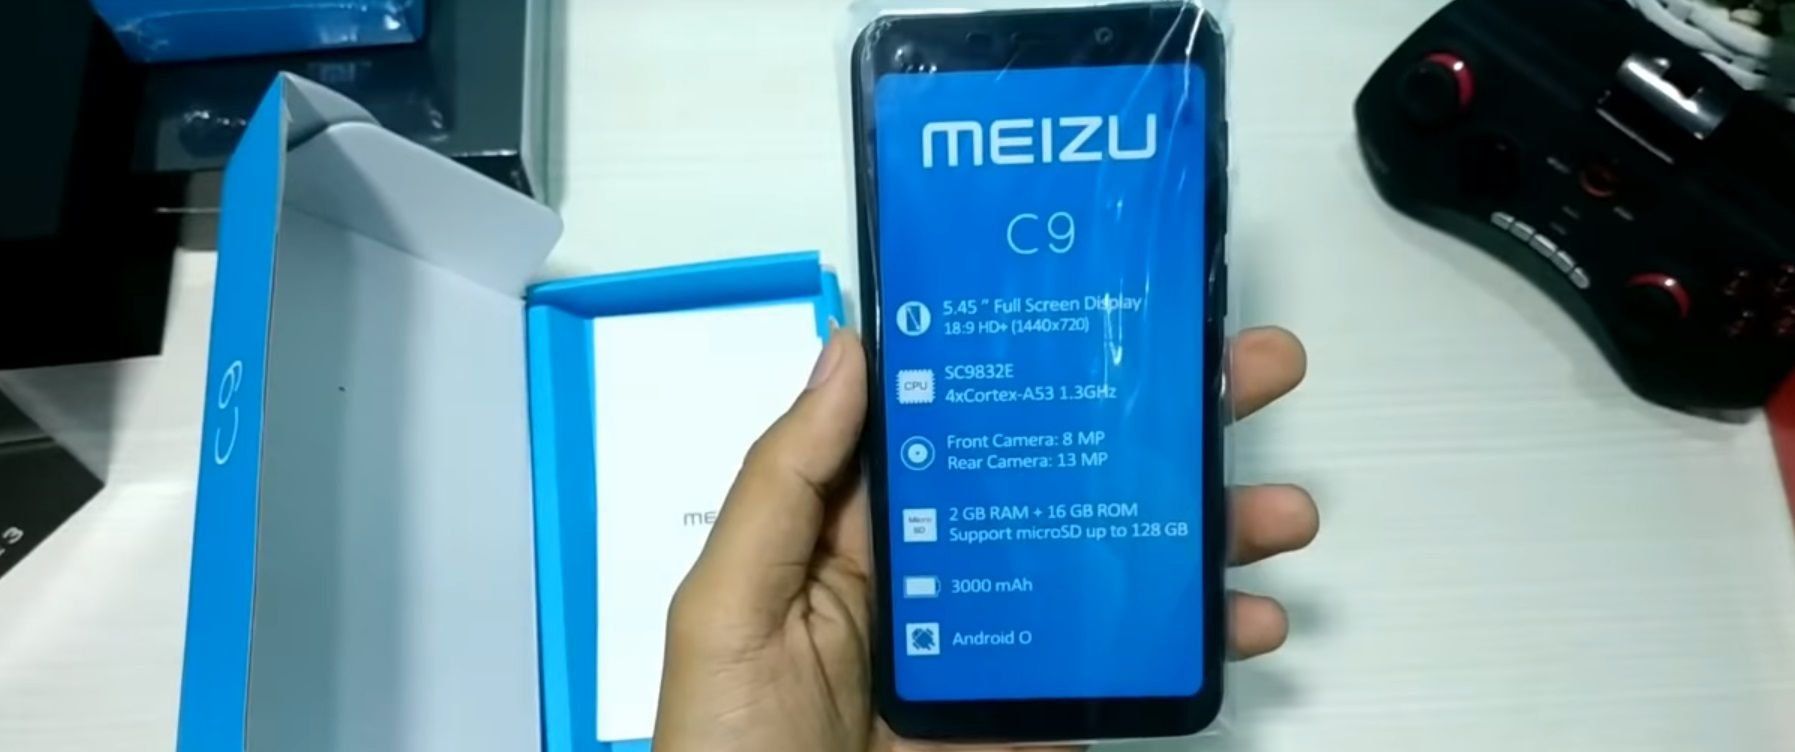 Smartphones Meizu C9 and C9 Pro - advantages and disadvantages